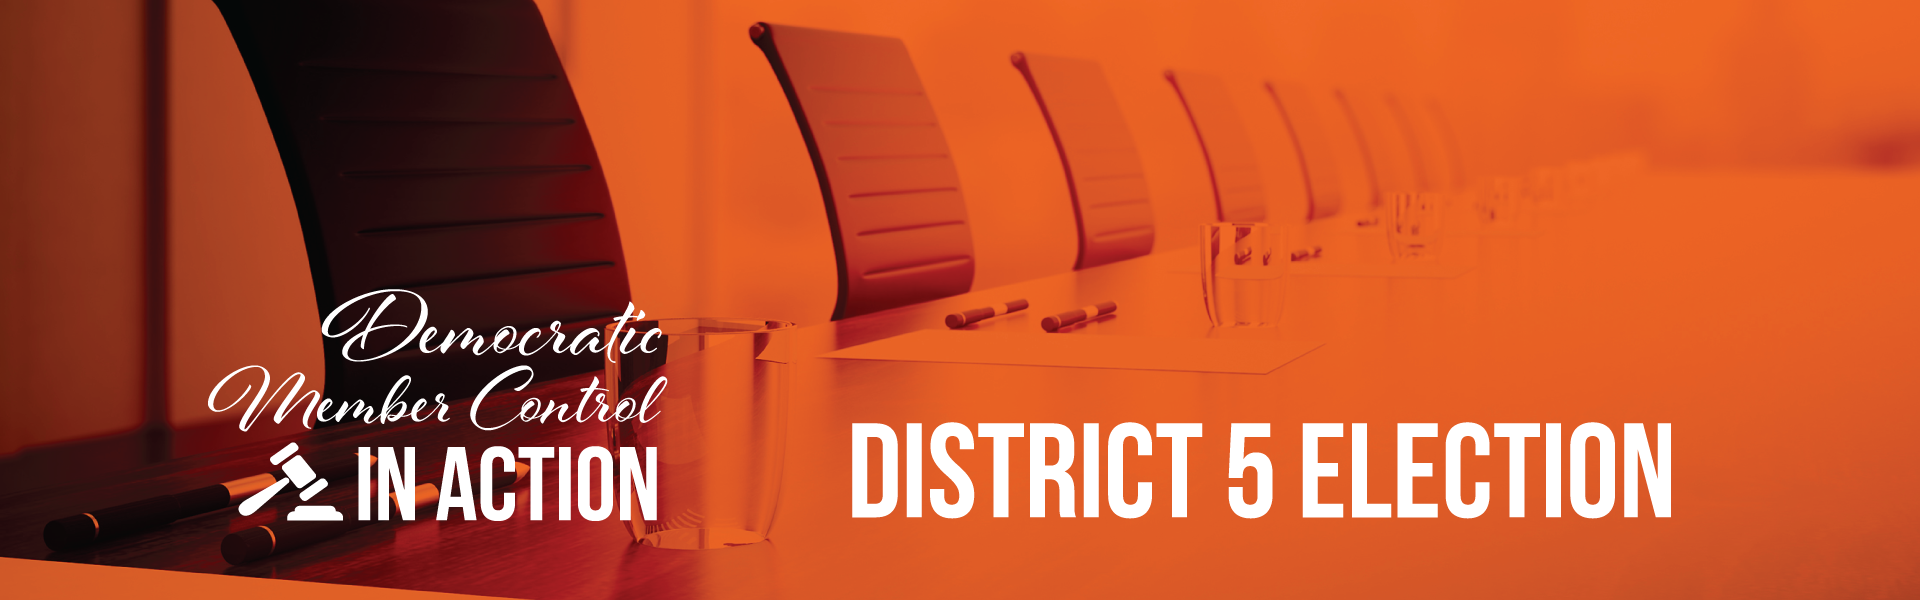 district 5 election